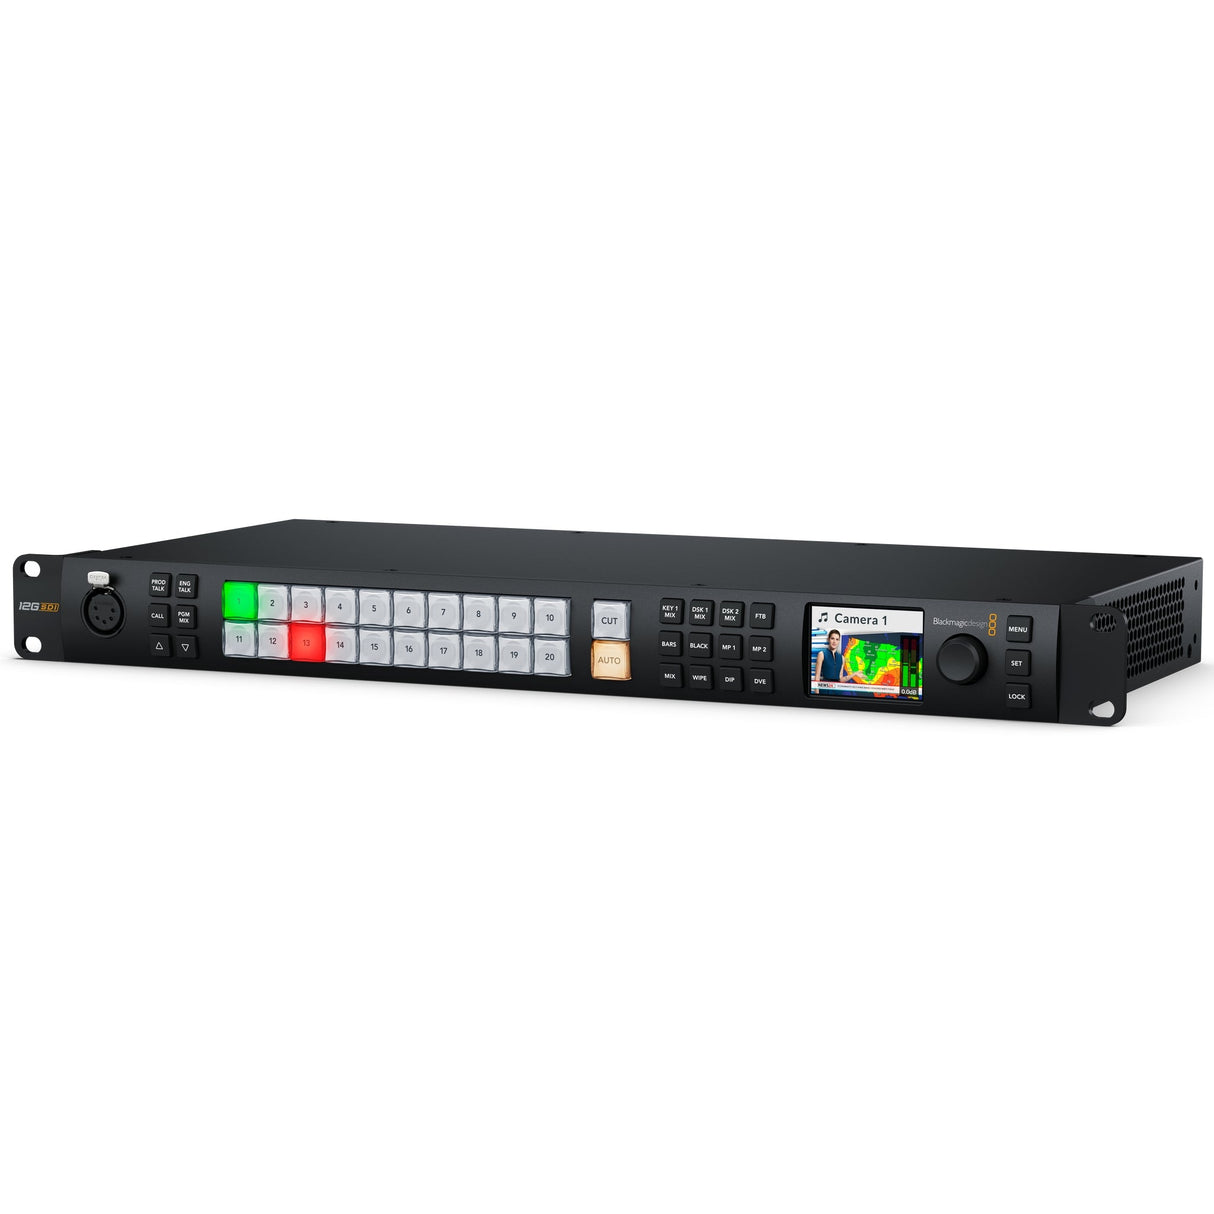 Blackmagic Design ATEM 2 M/E Constellation 4K Ultra HD Live Production Switcher